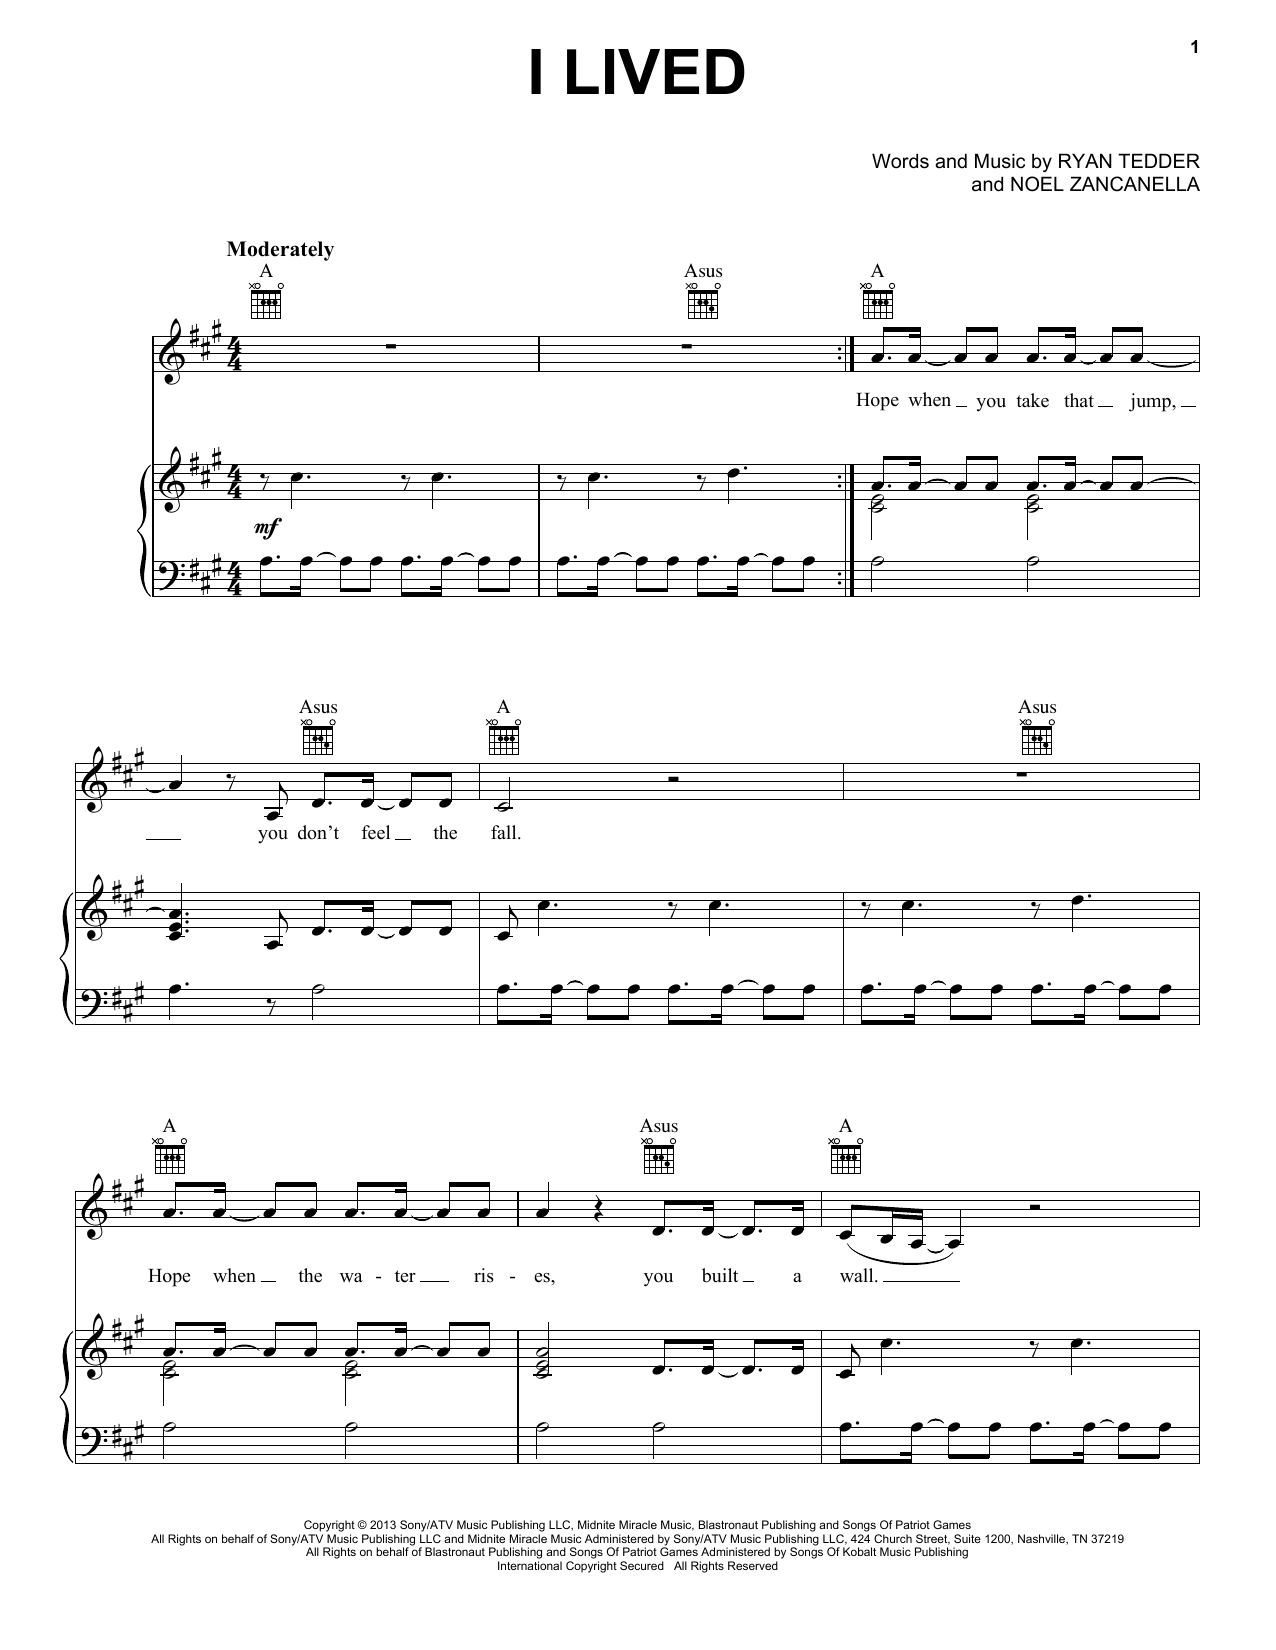 OneRepublic I Lived sheet music notes and chords arranged for Easy Piano